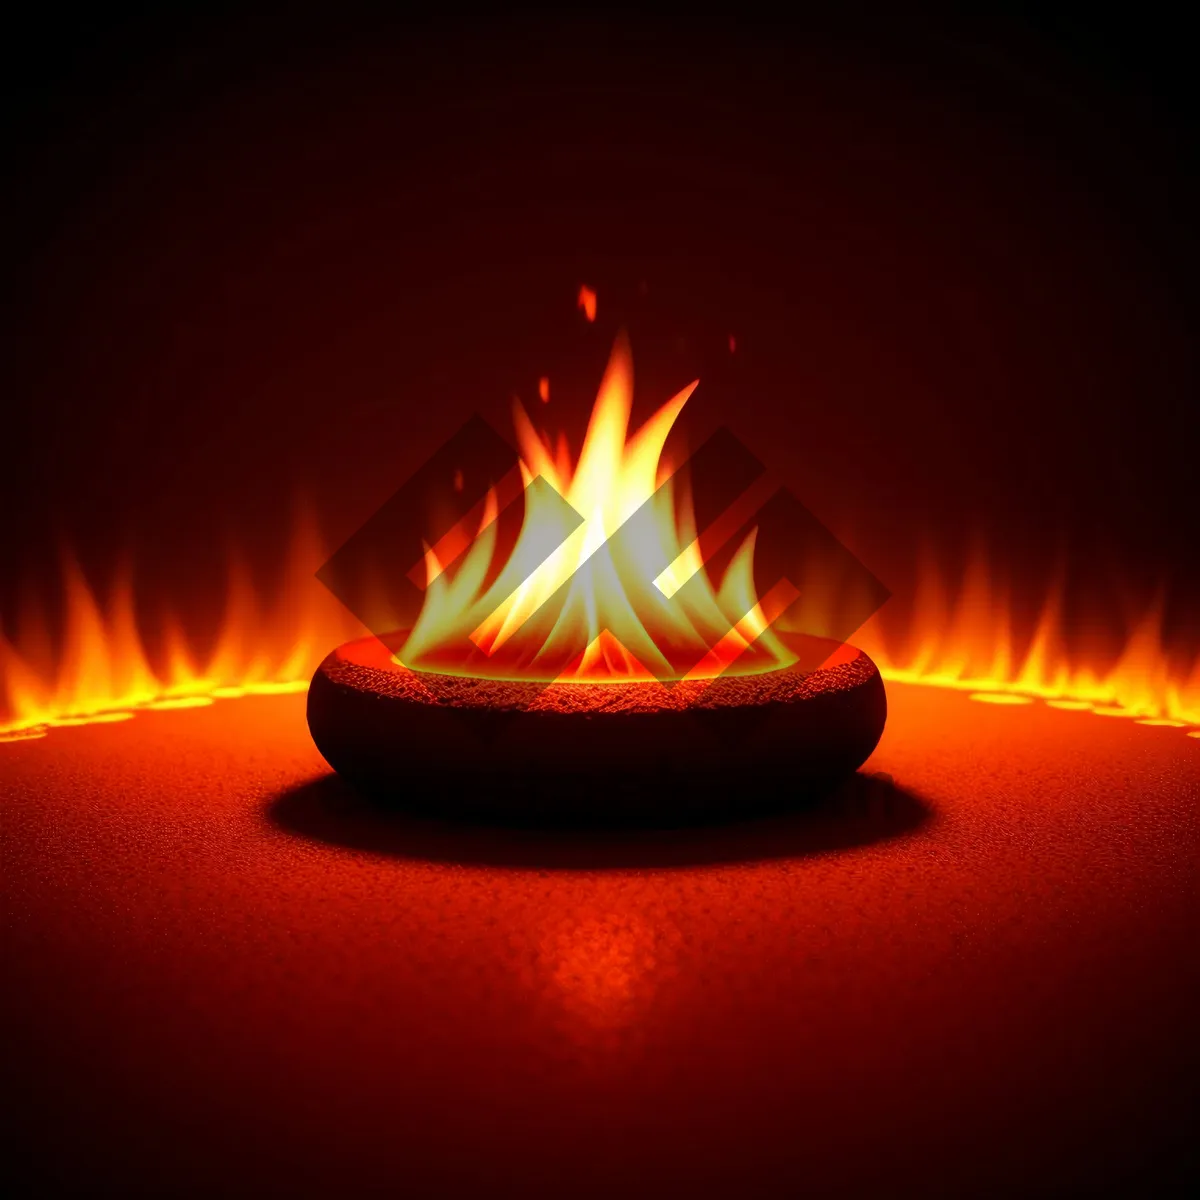 Picture of Fiery Inferno: A Blaze of Orange Flames